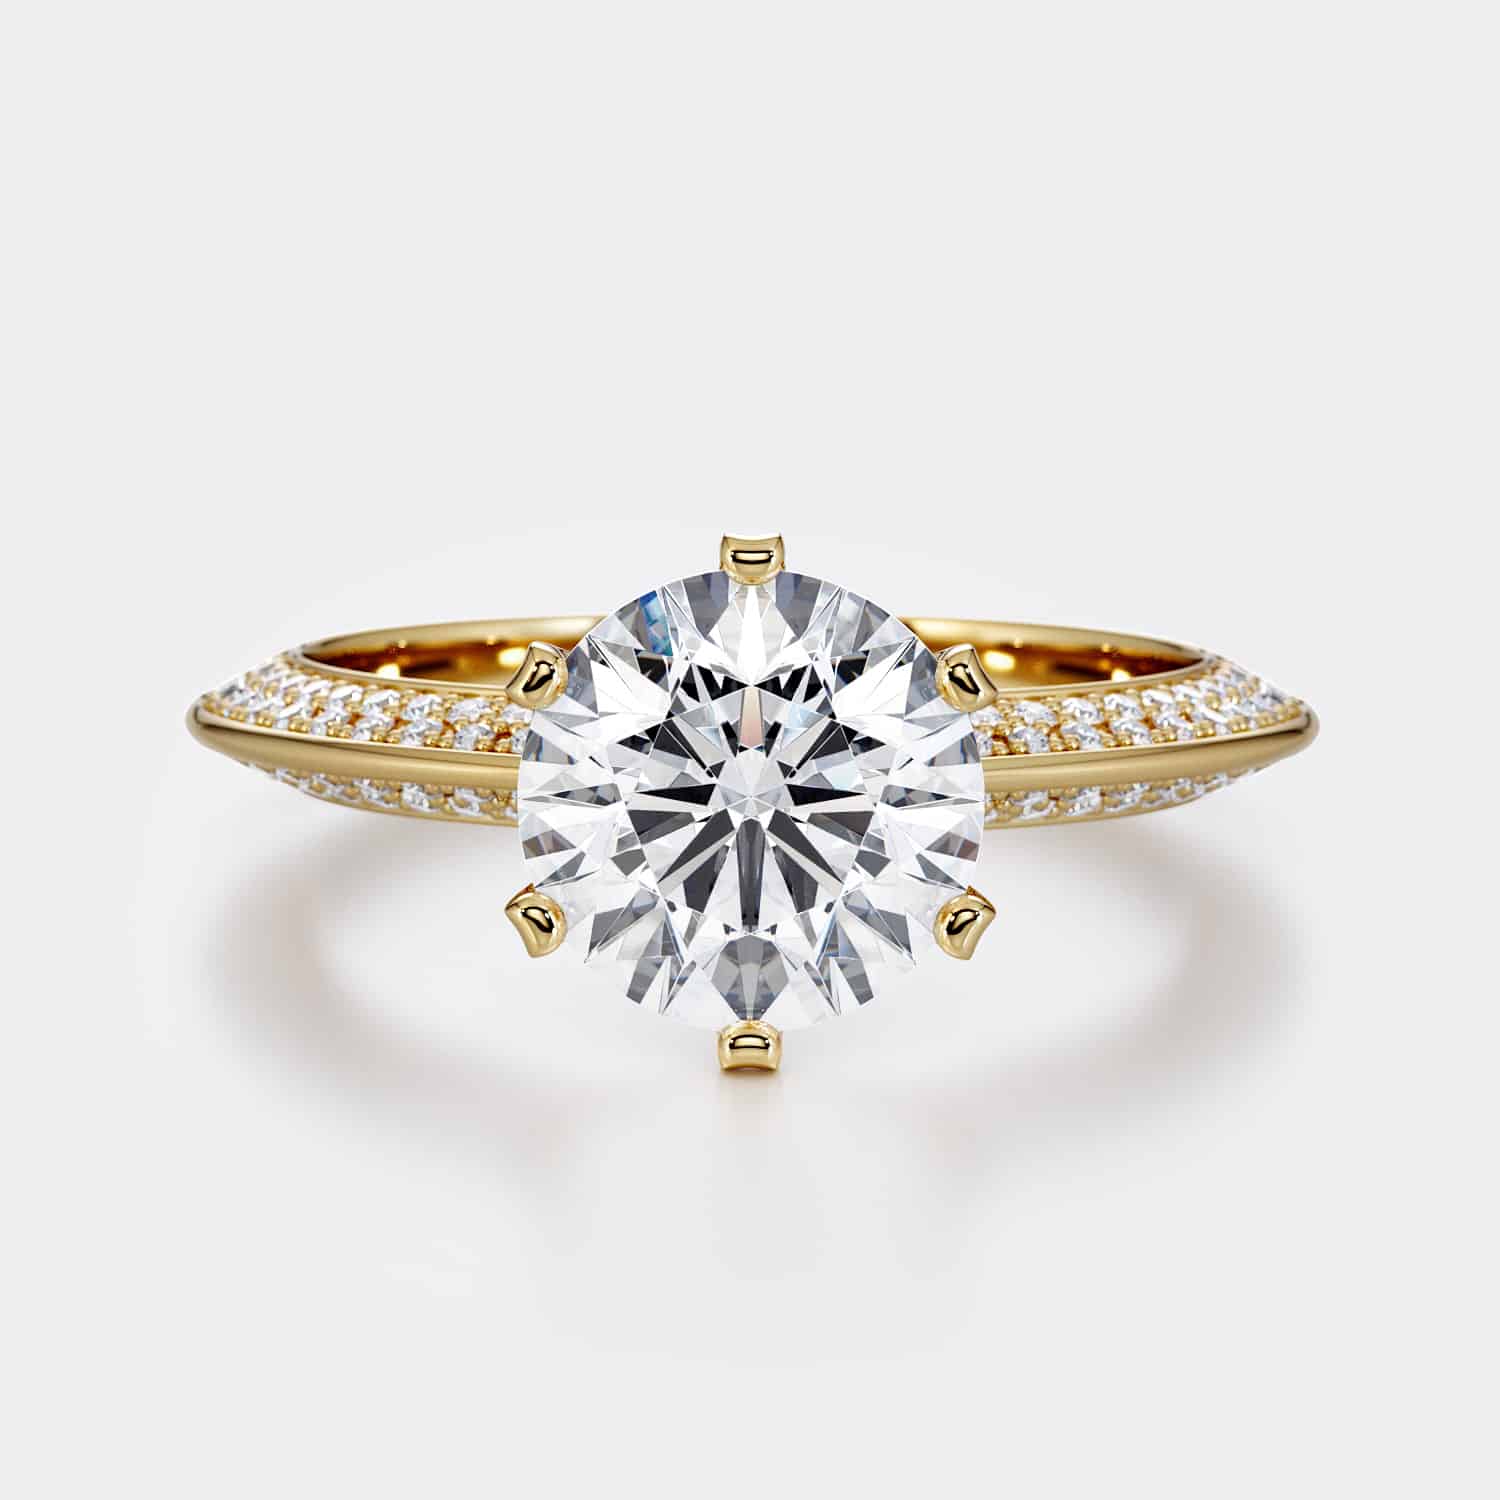 Ariel Jewelry - Custom Jewelry Design | Design Dreams into Rings